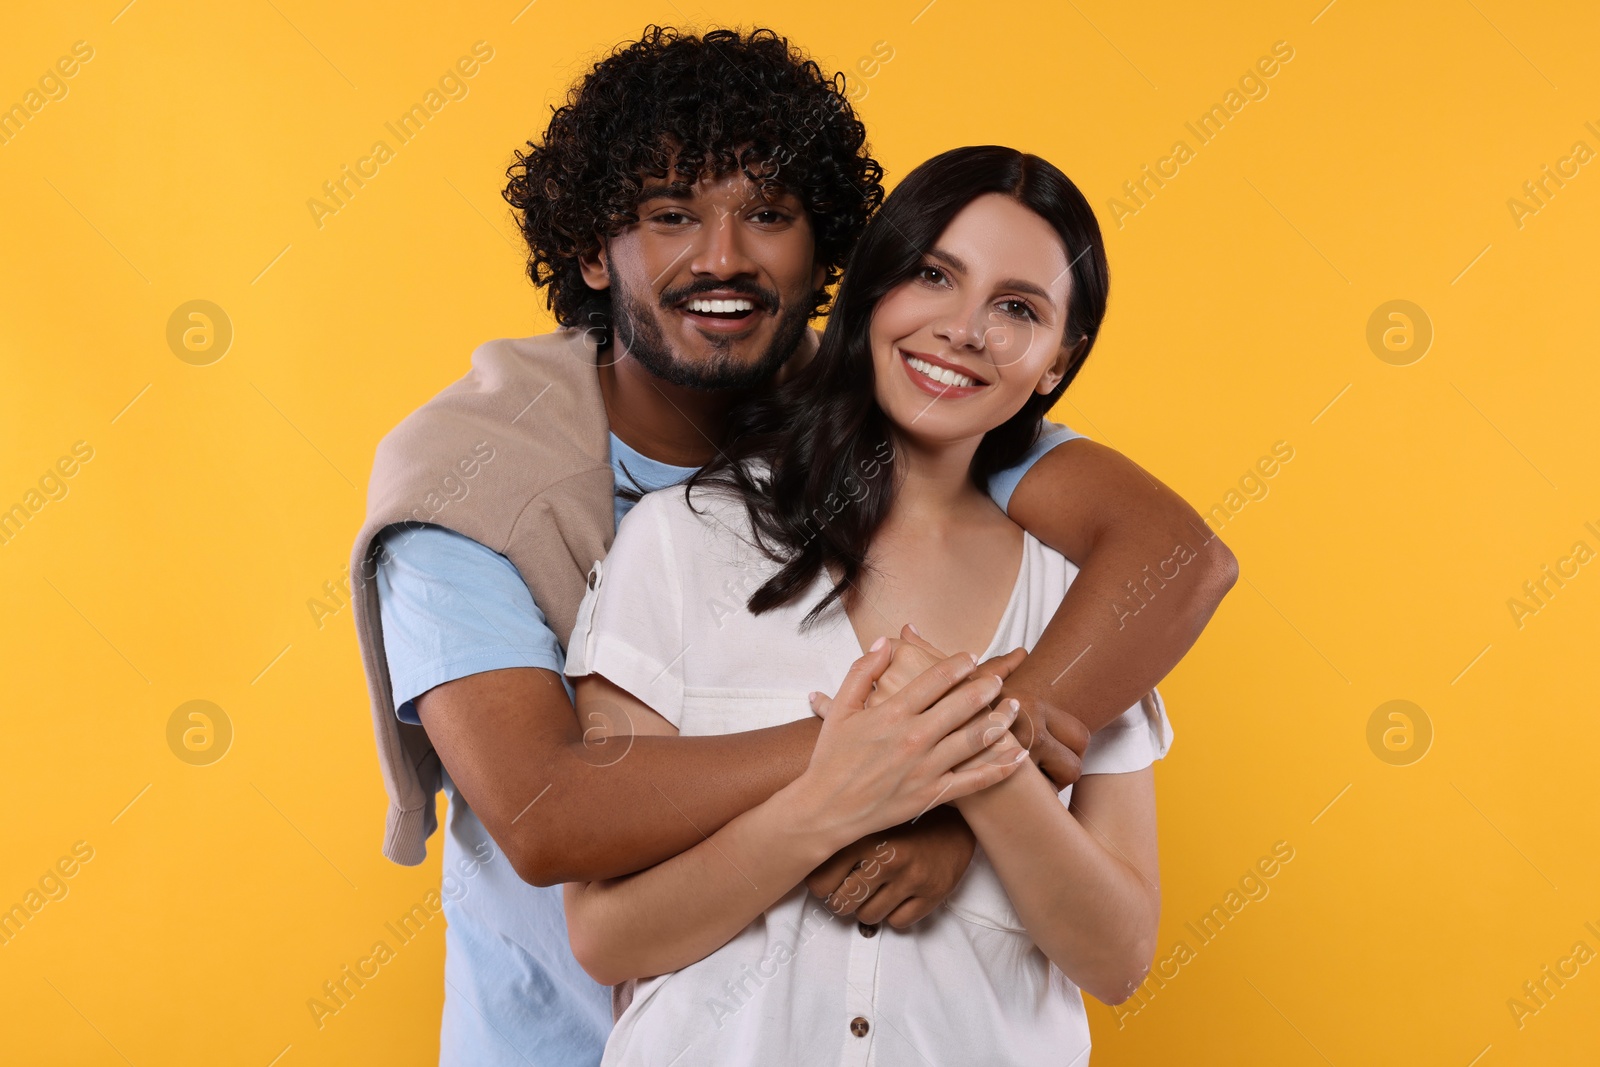 Photo of International dating. Happy couple hugging on yellow background